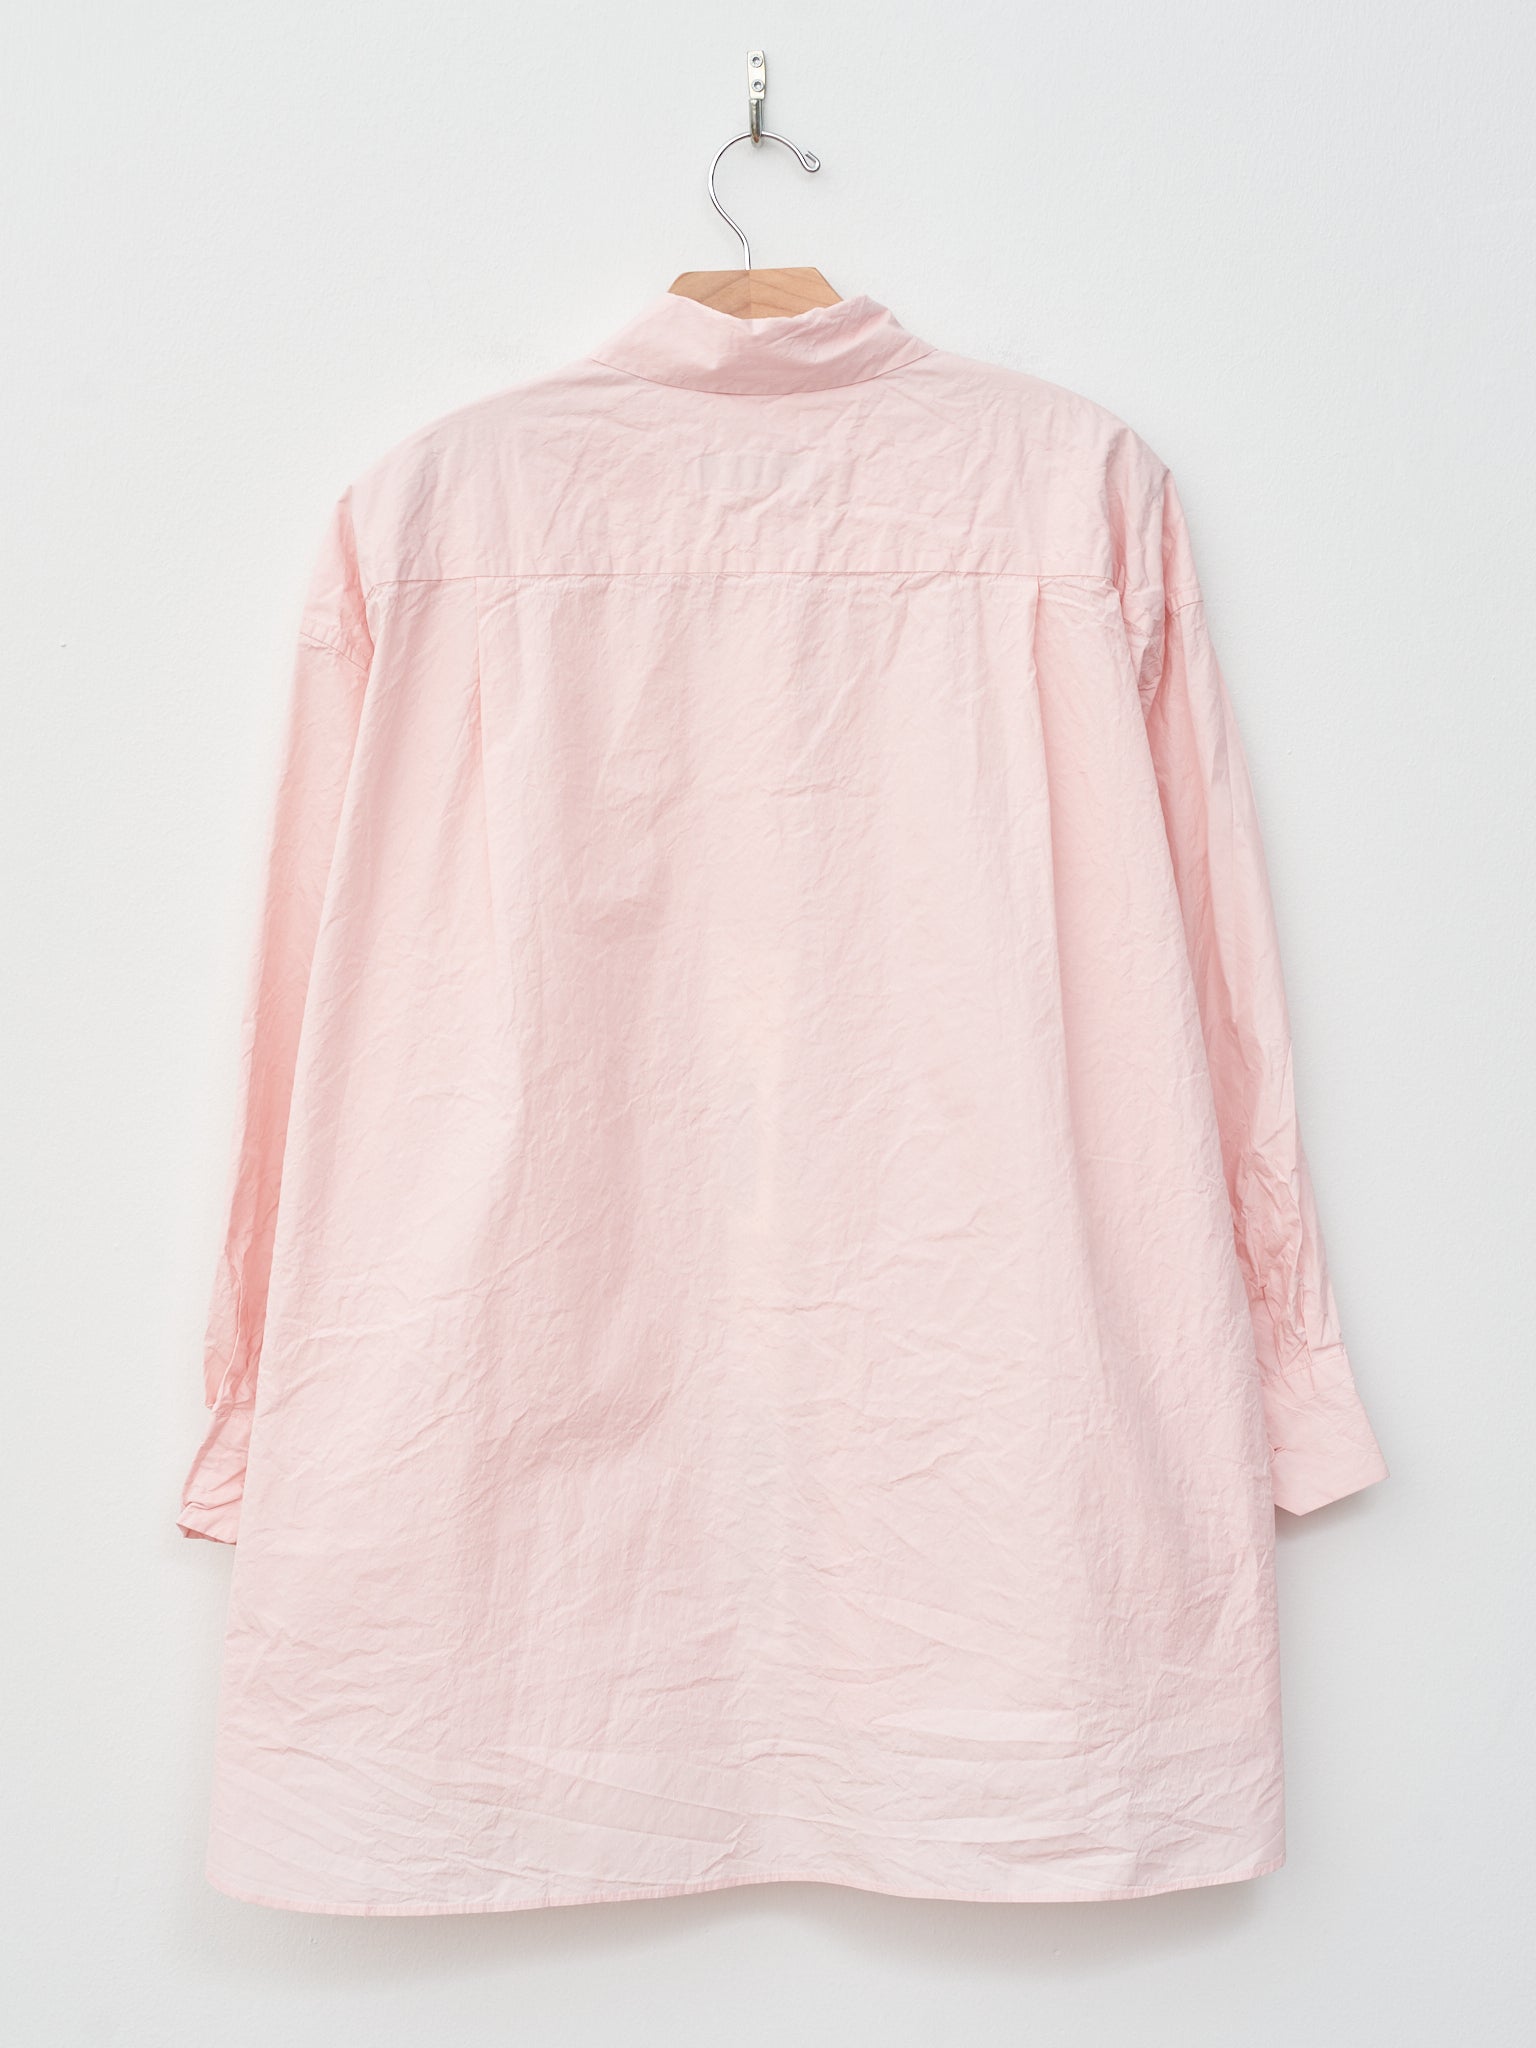 Namu Shop - Casey Casey Hamnet Shirt - Pink